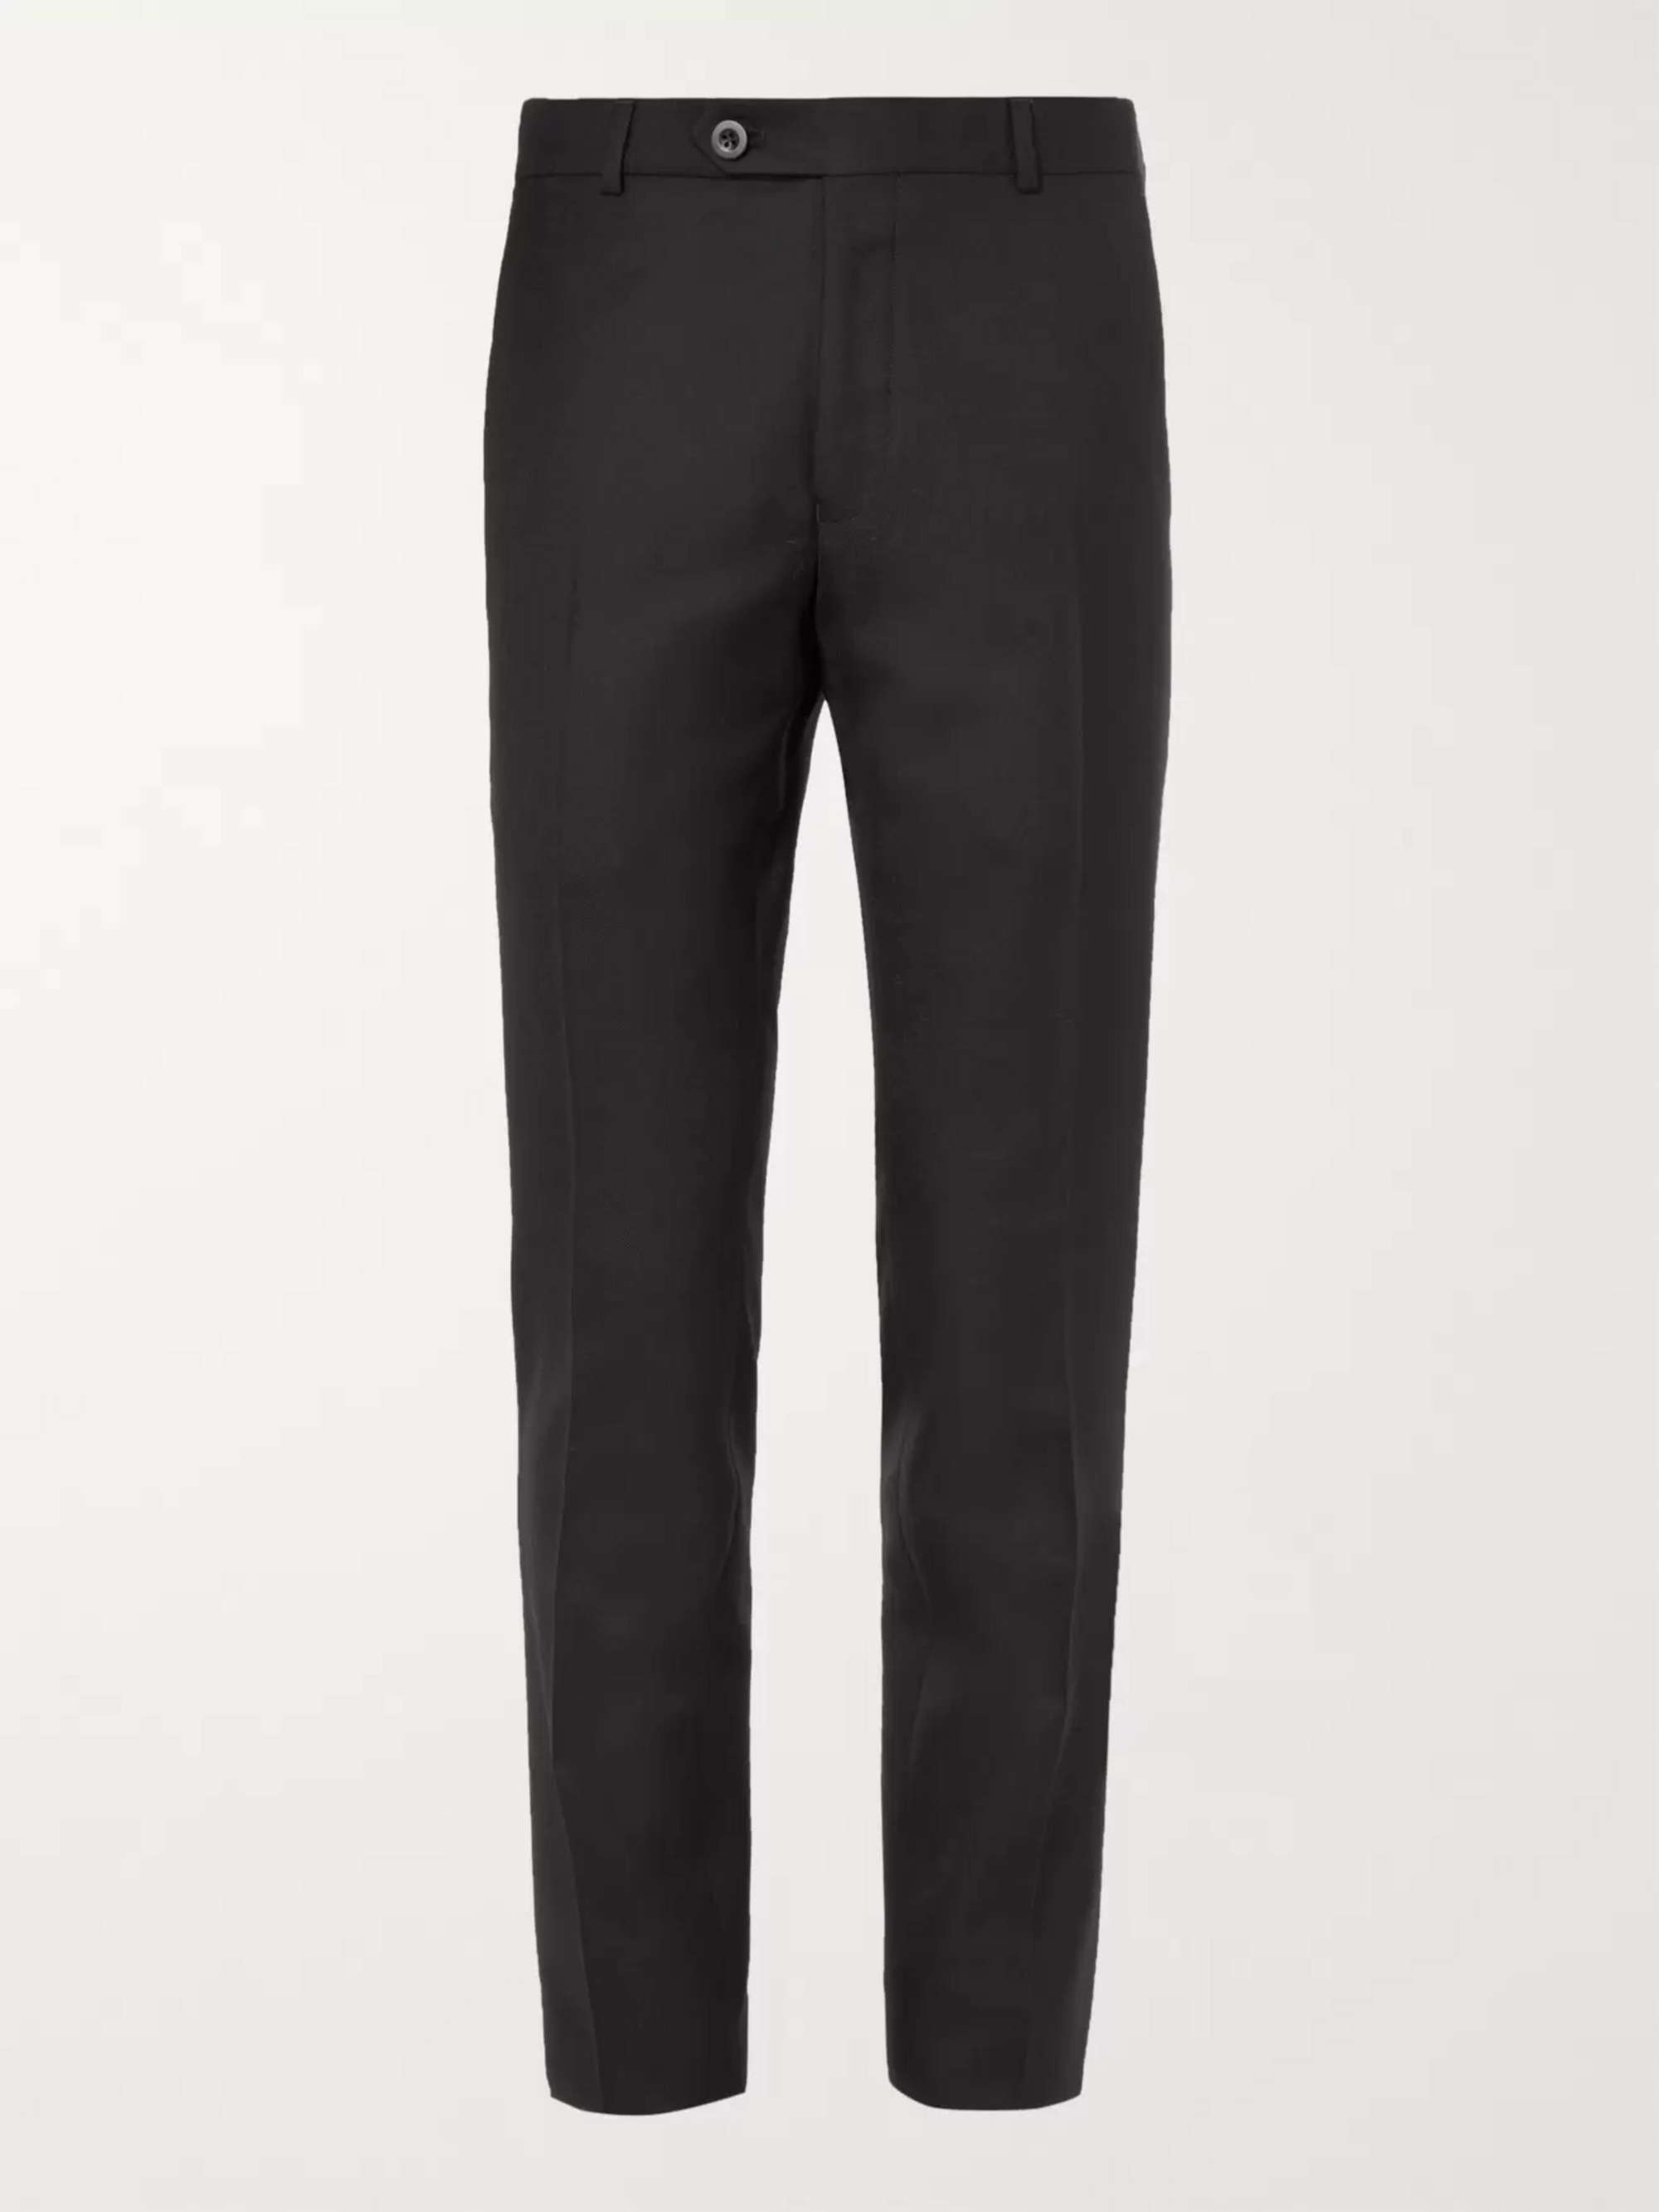 Slim Fit Cotton twill trousers - Black - Men | H&M IN